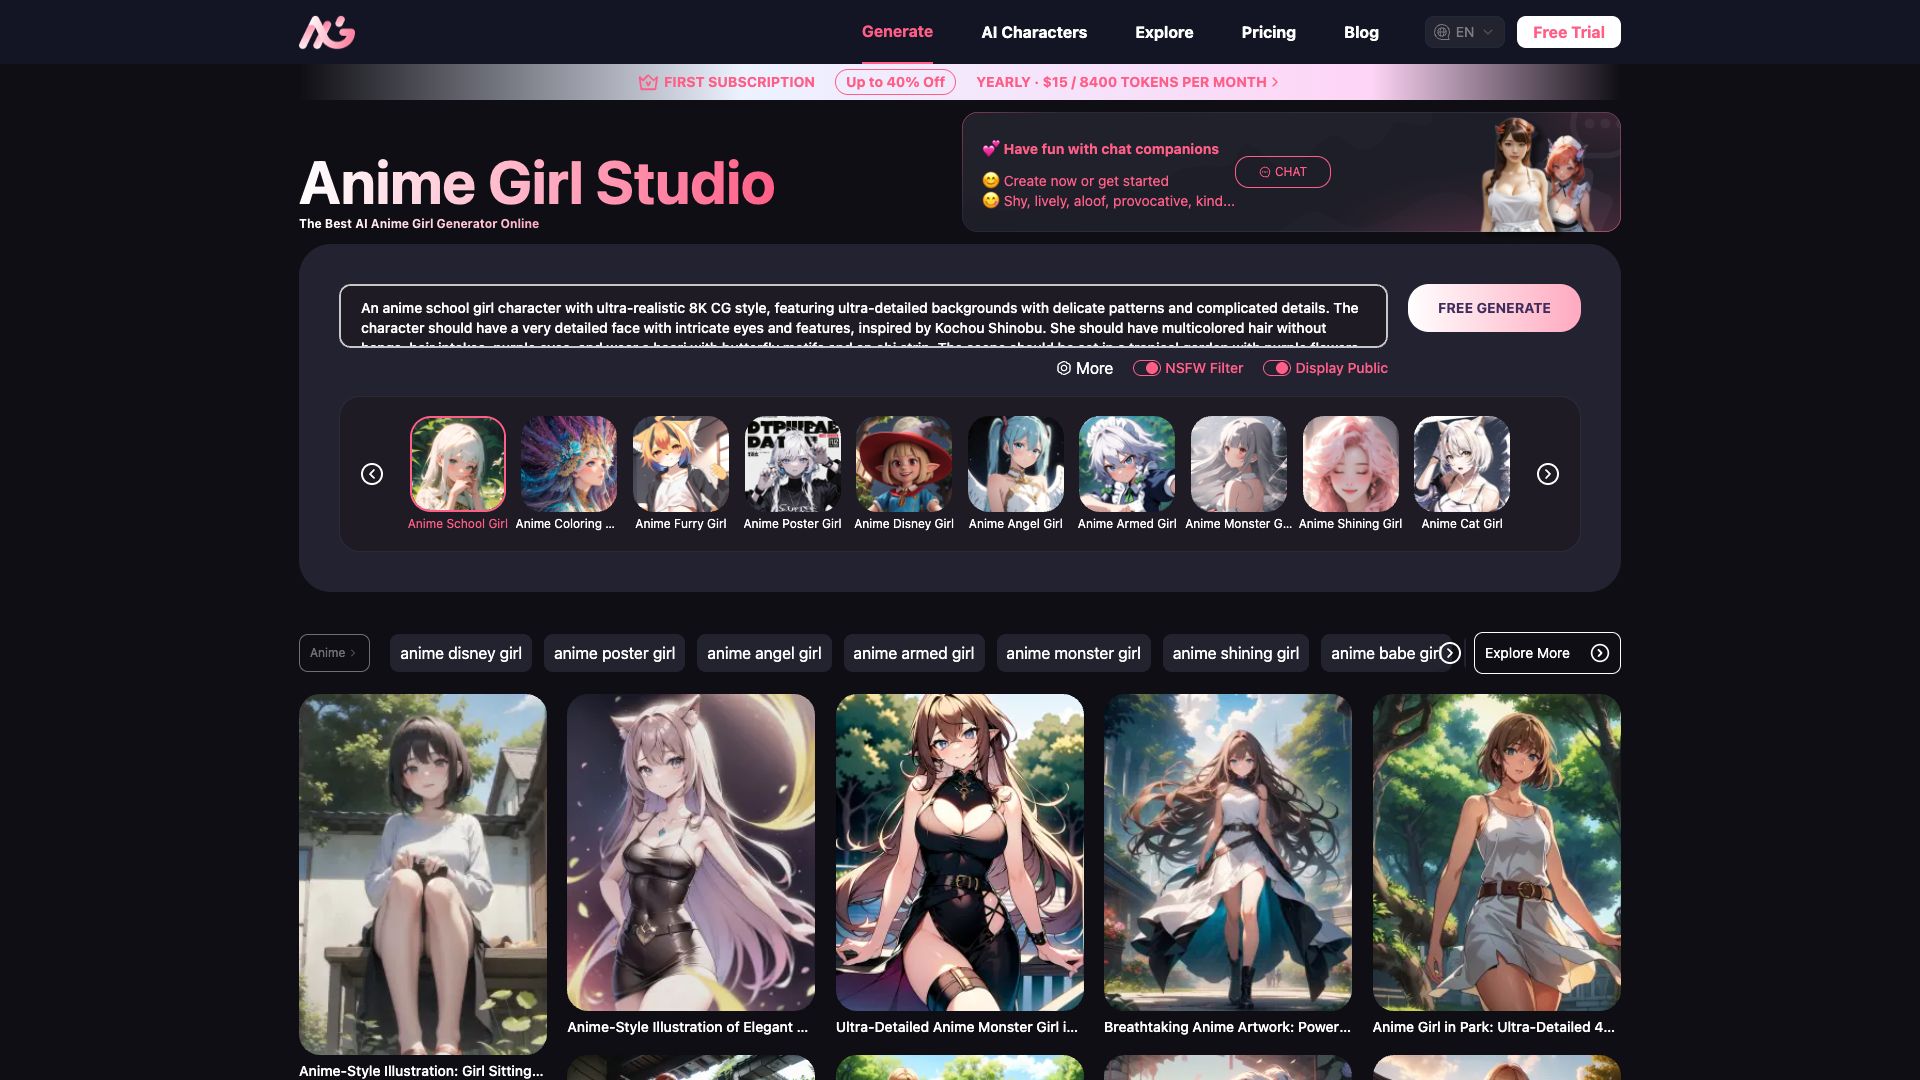 Anime Girl Studio